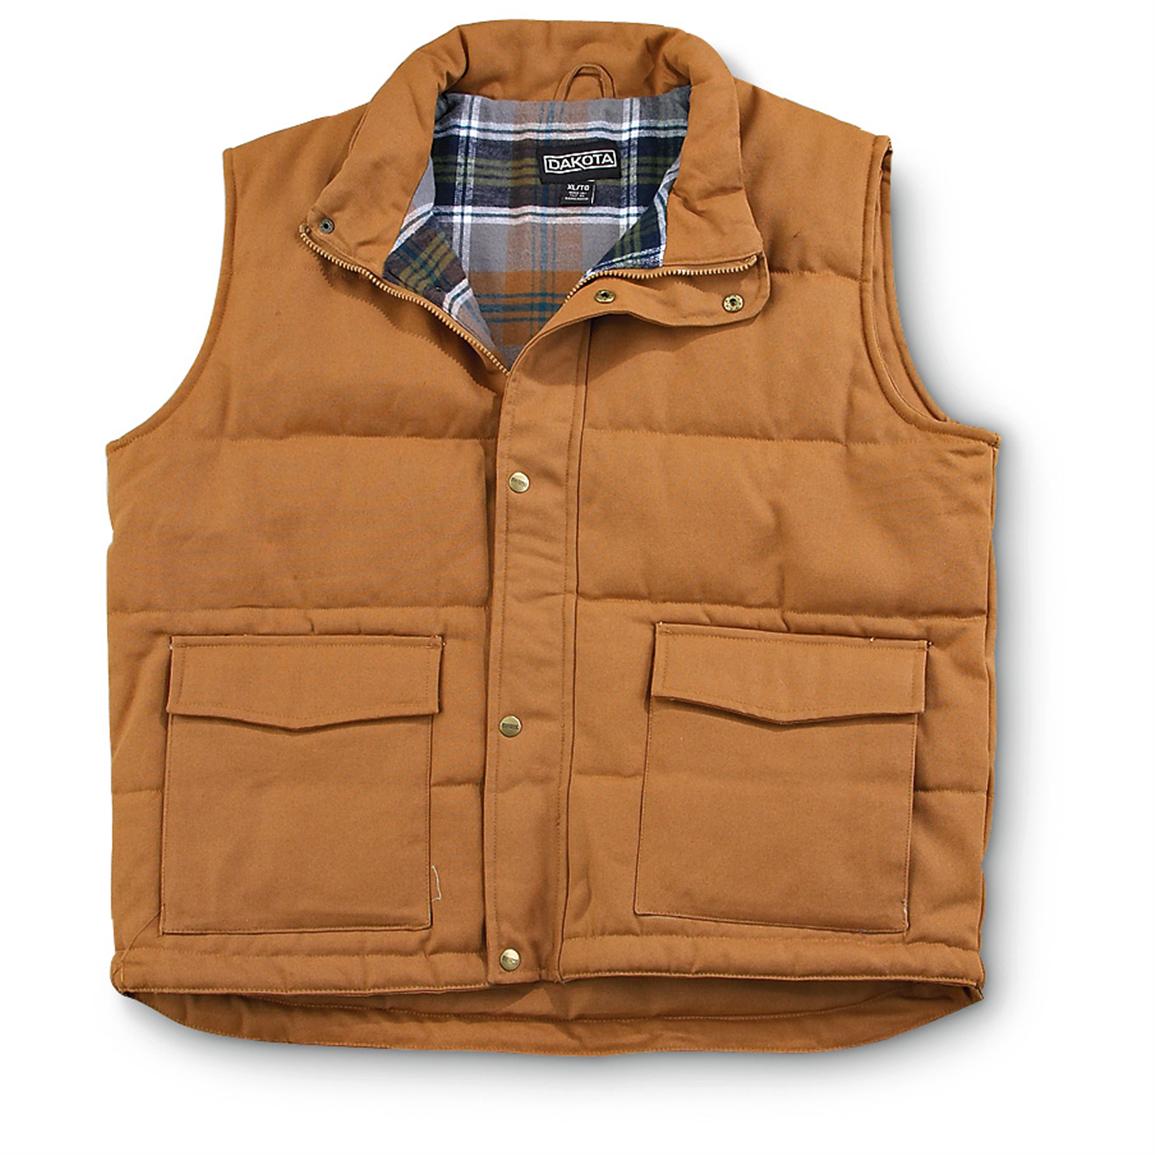 Cotton Duck Flannel - lined Work Vest - 154074, Vests at Sportsman's Guide